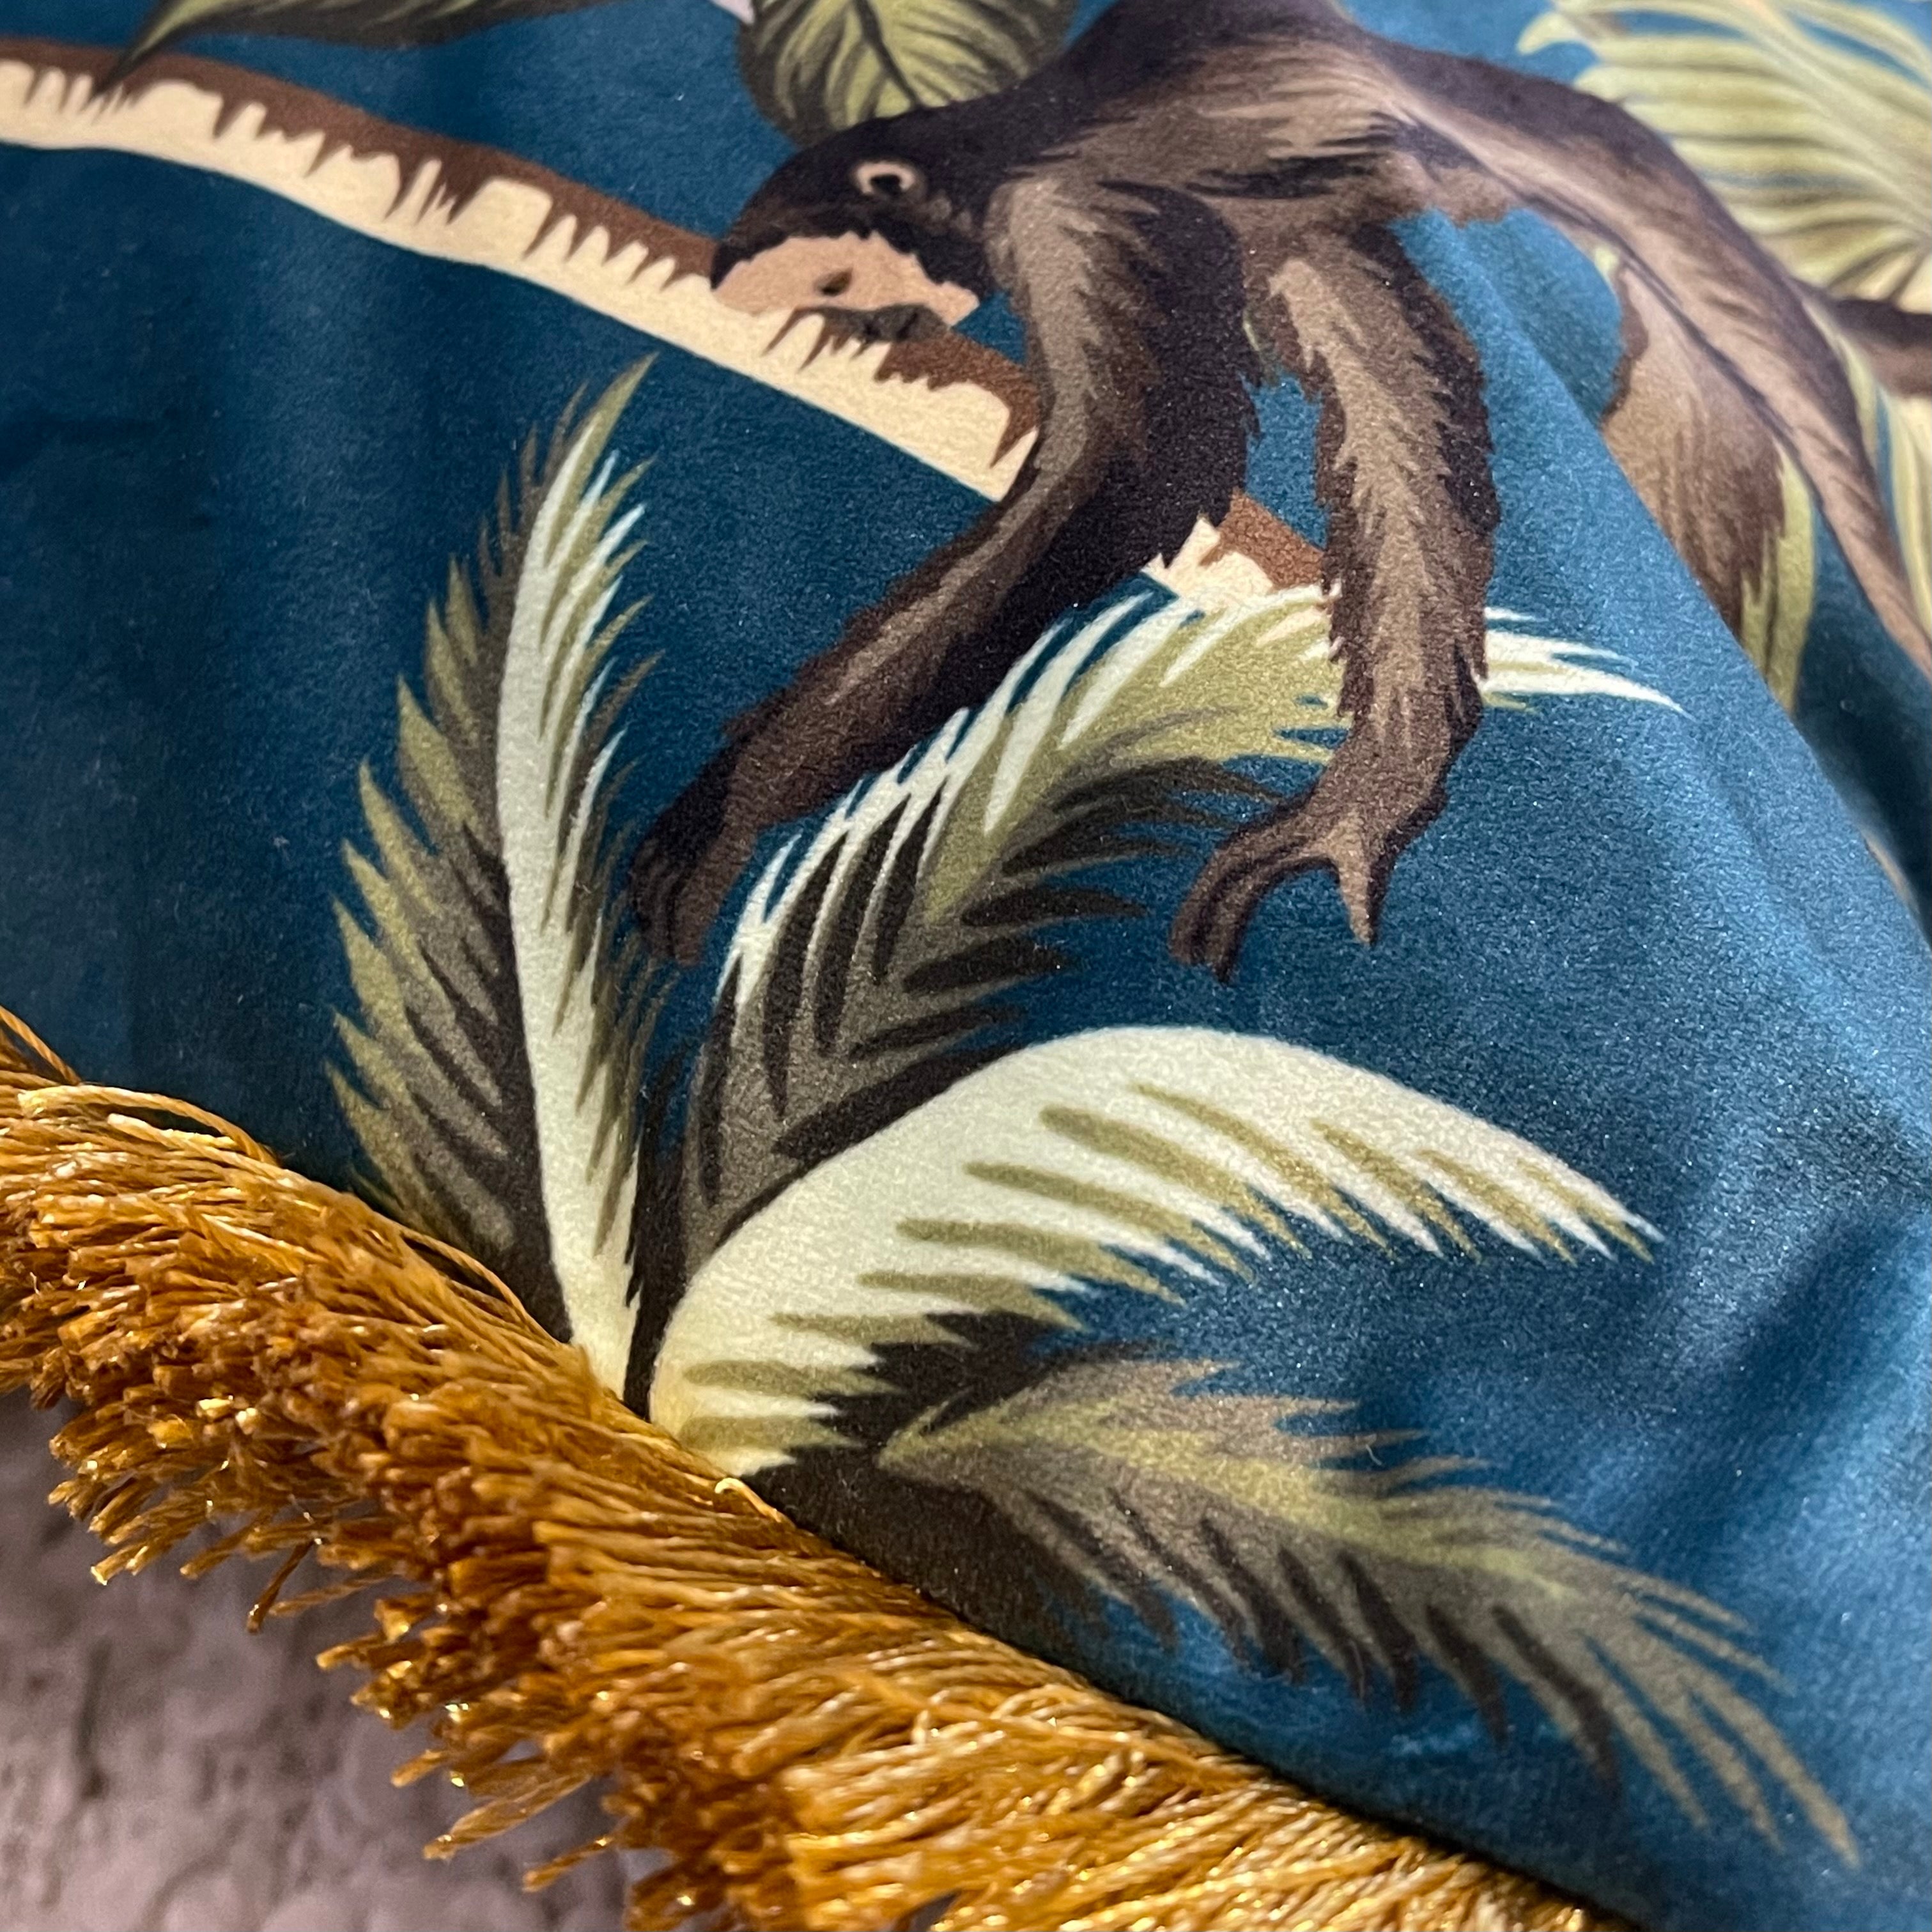 Tropical Palm & Monkey Cushion Covers